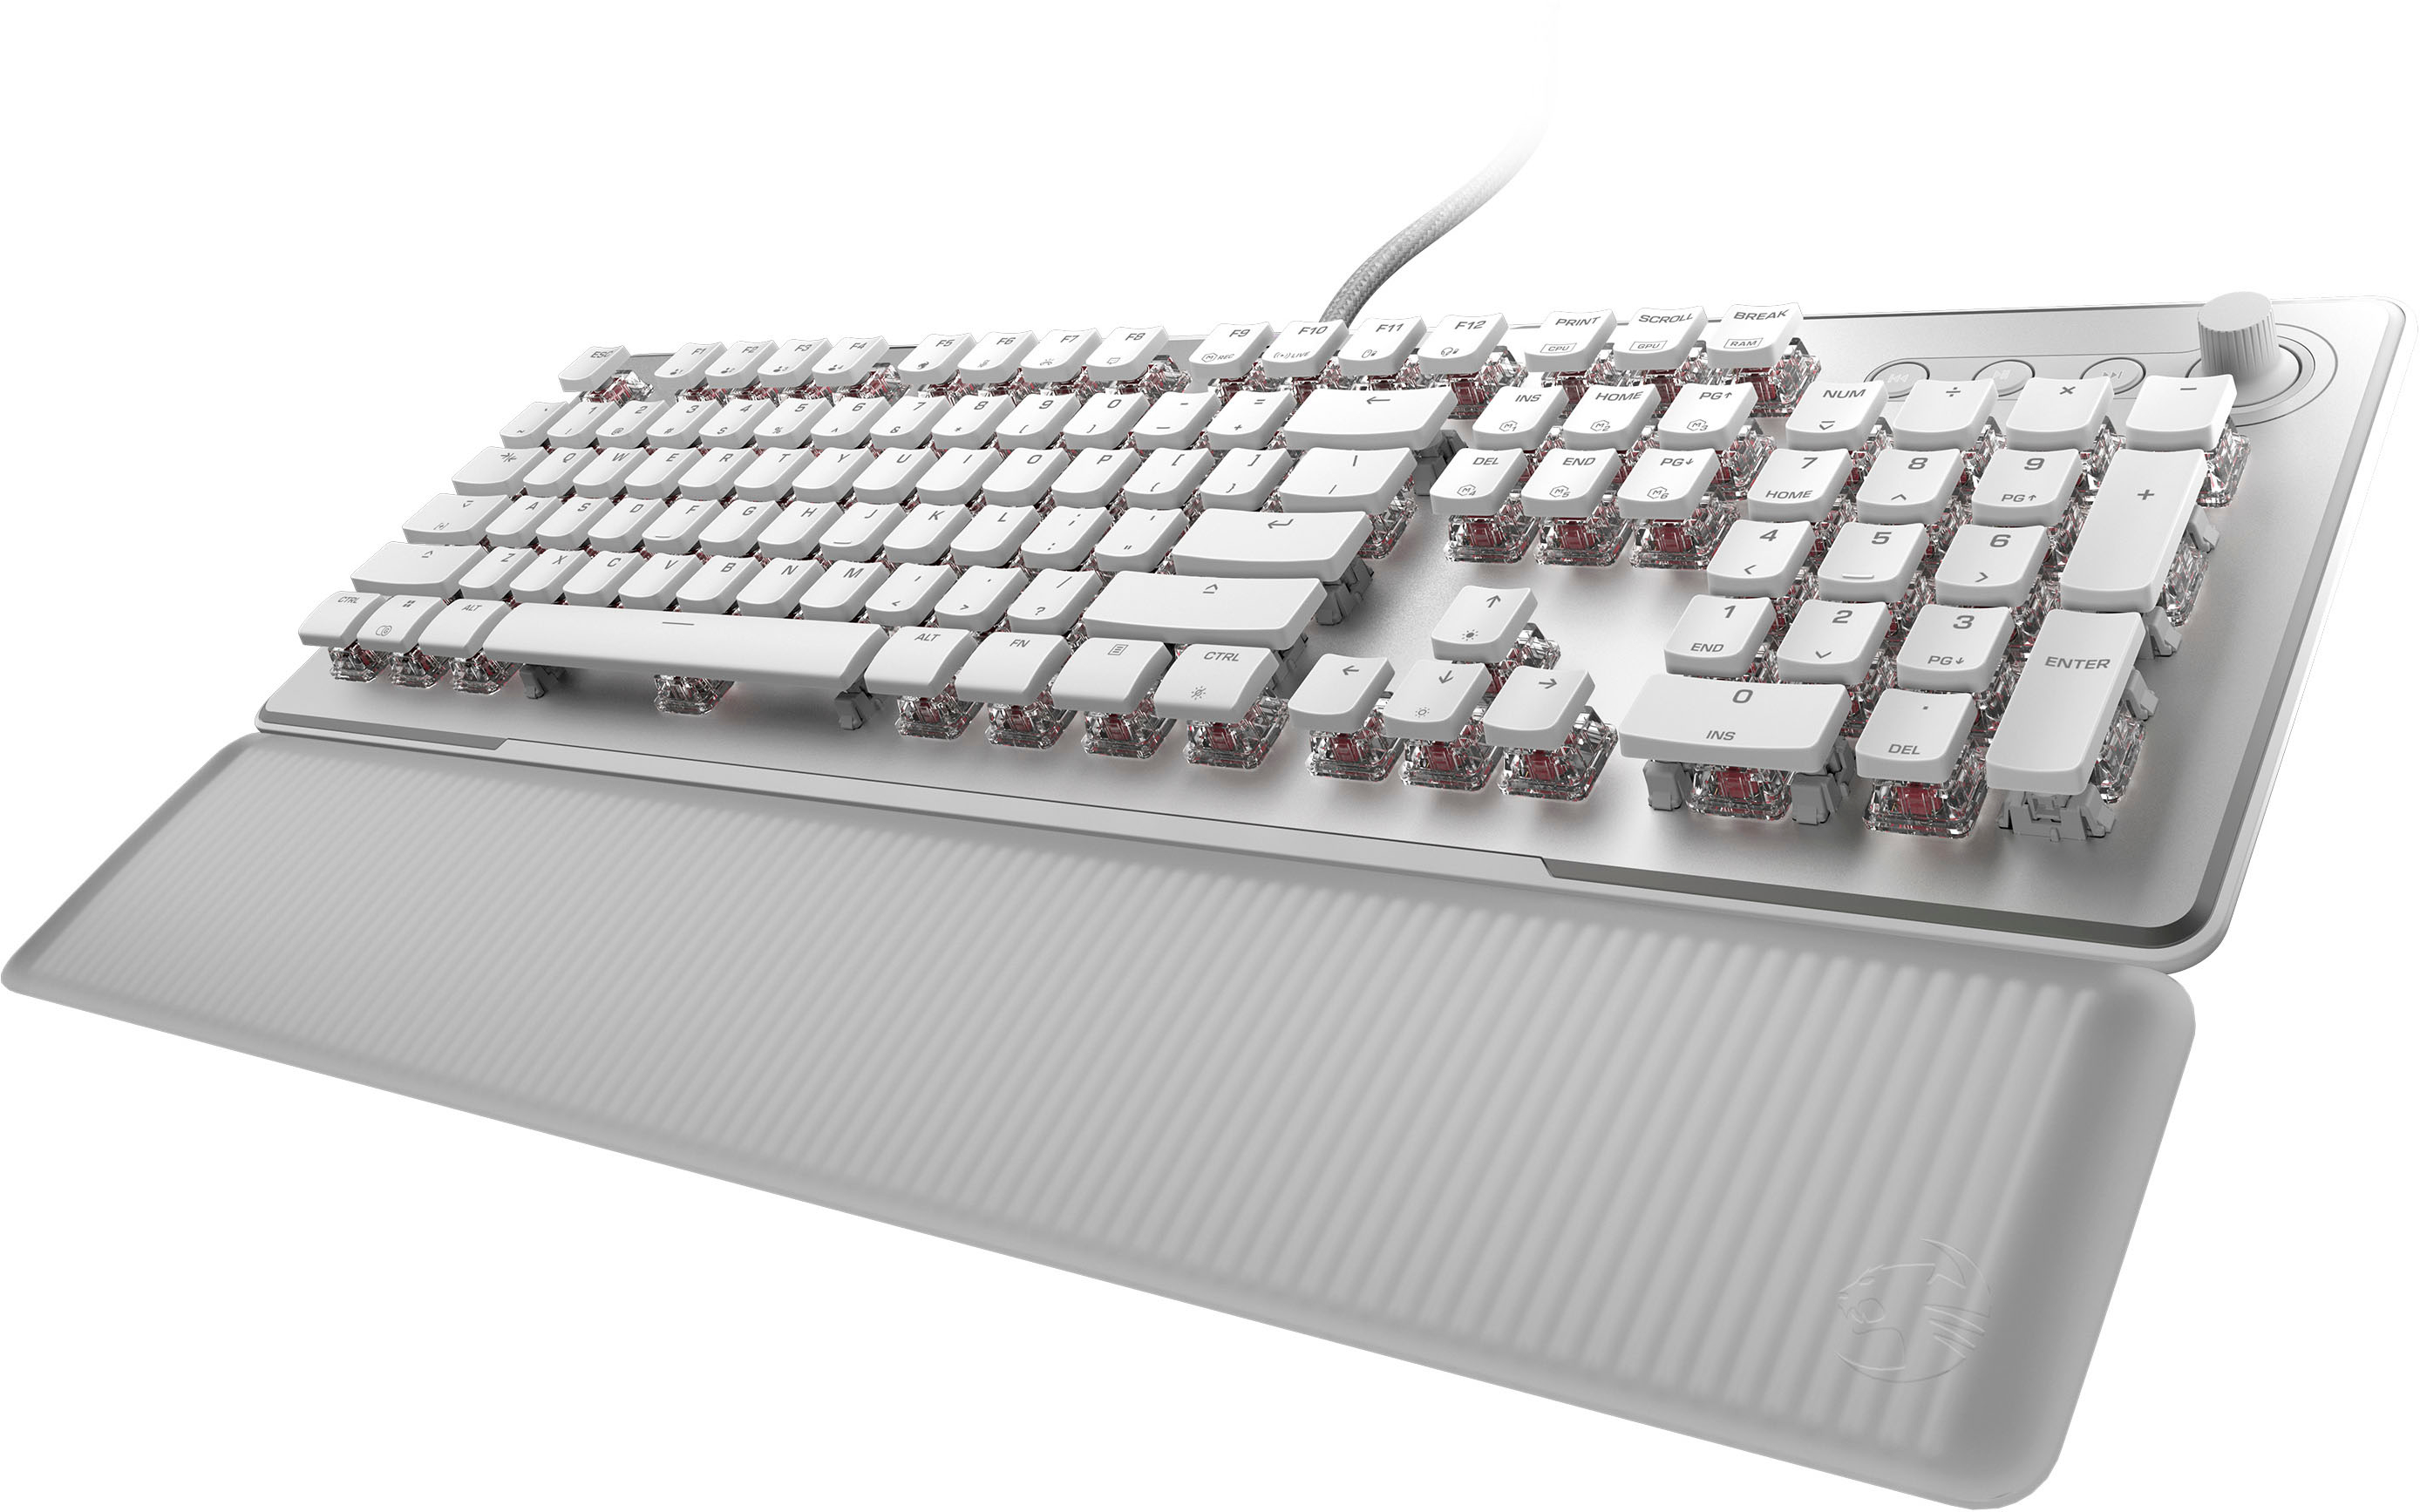  ROCCAT Vulcan II Max – Optical-Mechanical PC Gaming Keyboard,  Customizable RGB Illuminated Keys and Palm Rest, TITAN II Switches,  Aluminum Plate : Electronics